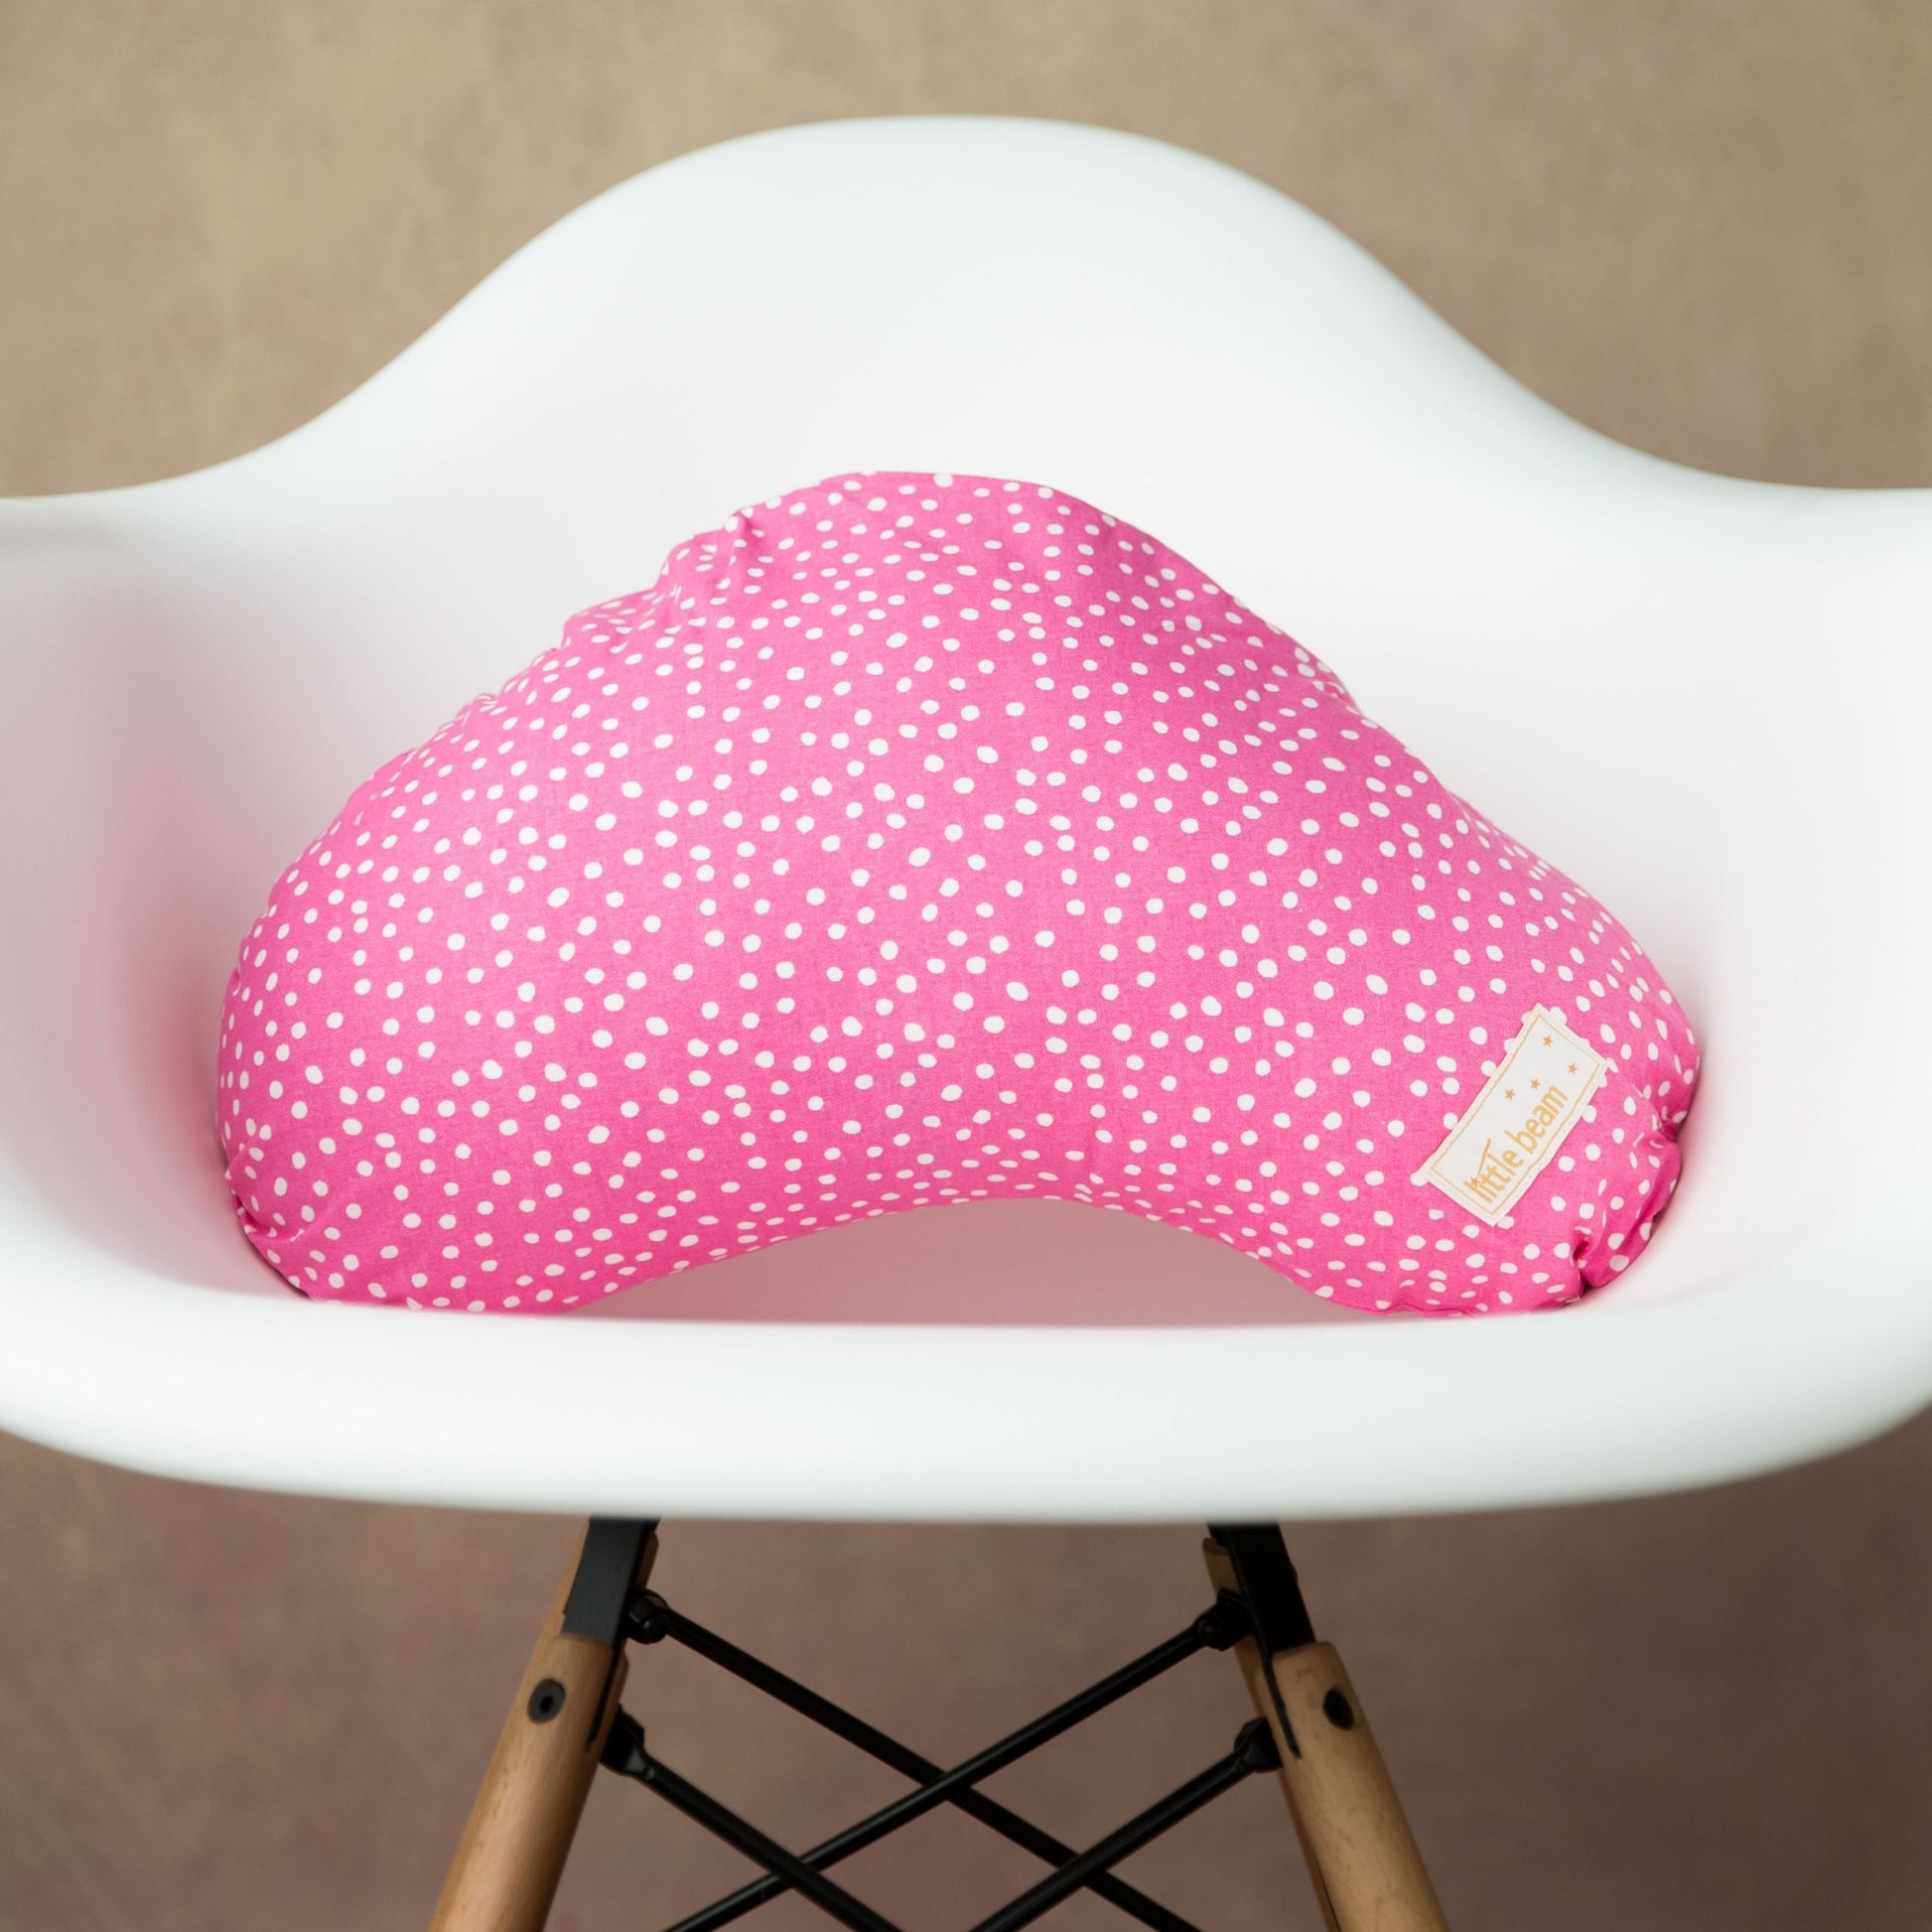 littlebeam Breastfeeding Pillow Pattern Floating Dots | littlebeam